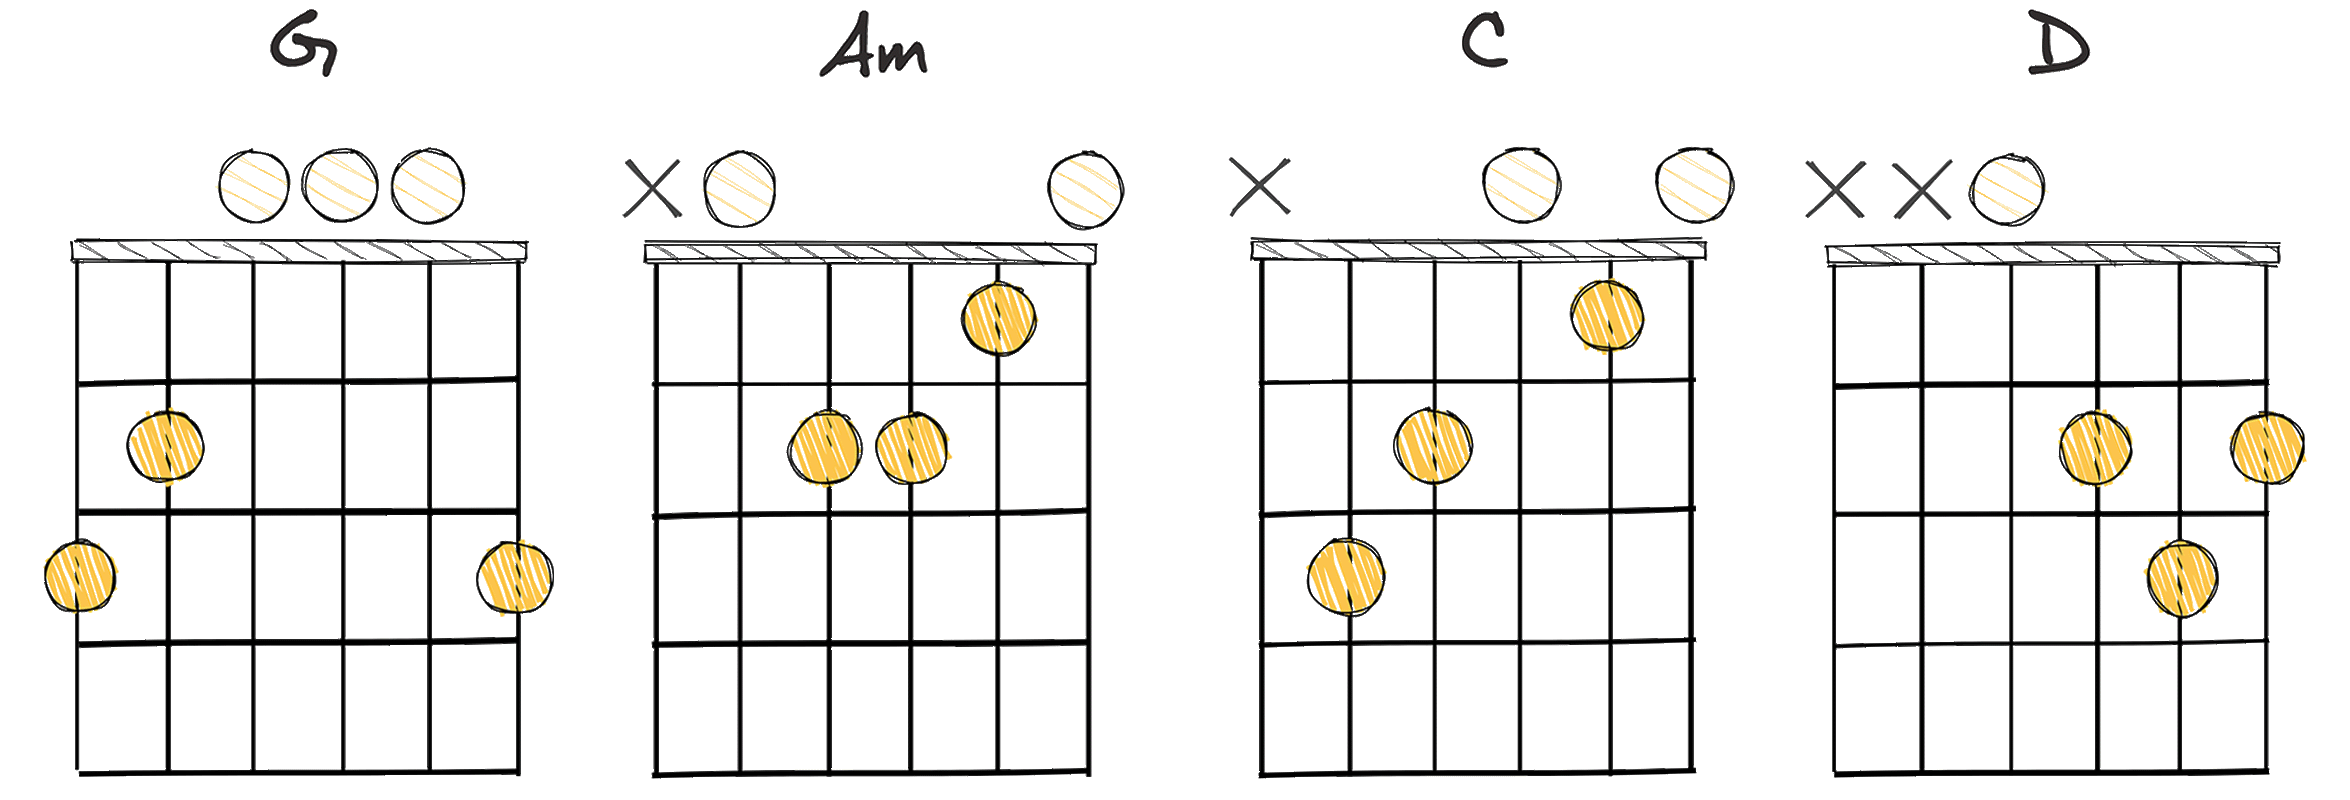 Replying to @dannyosu I love this chord progression sm #guitar